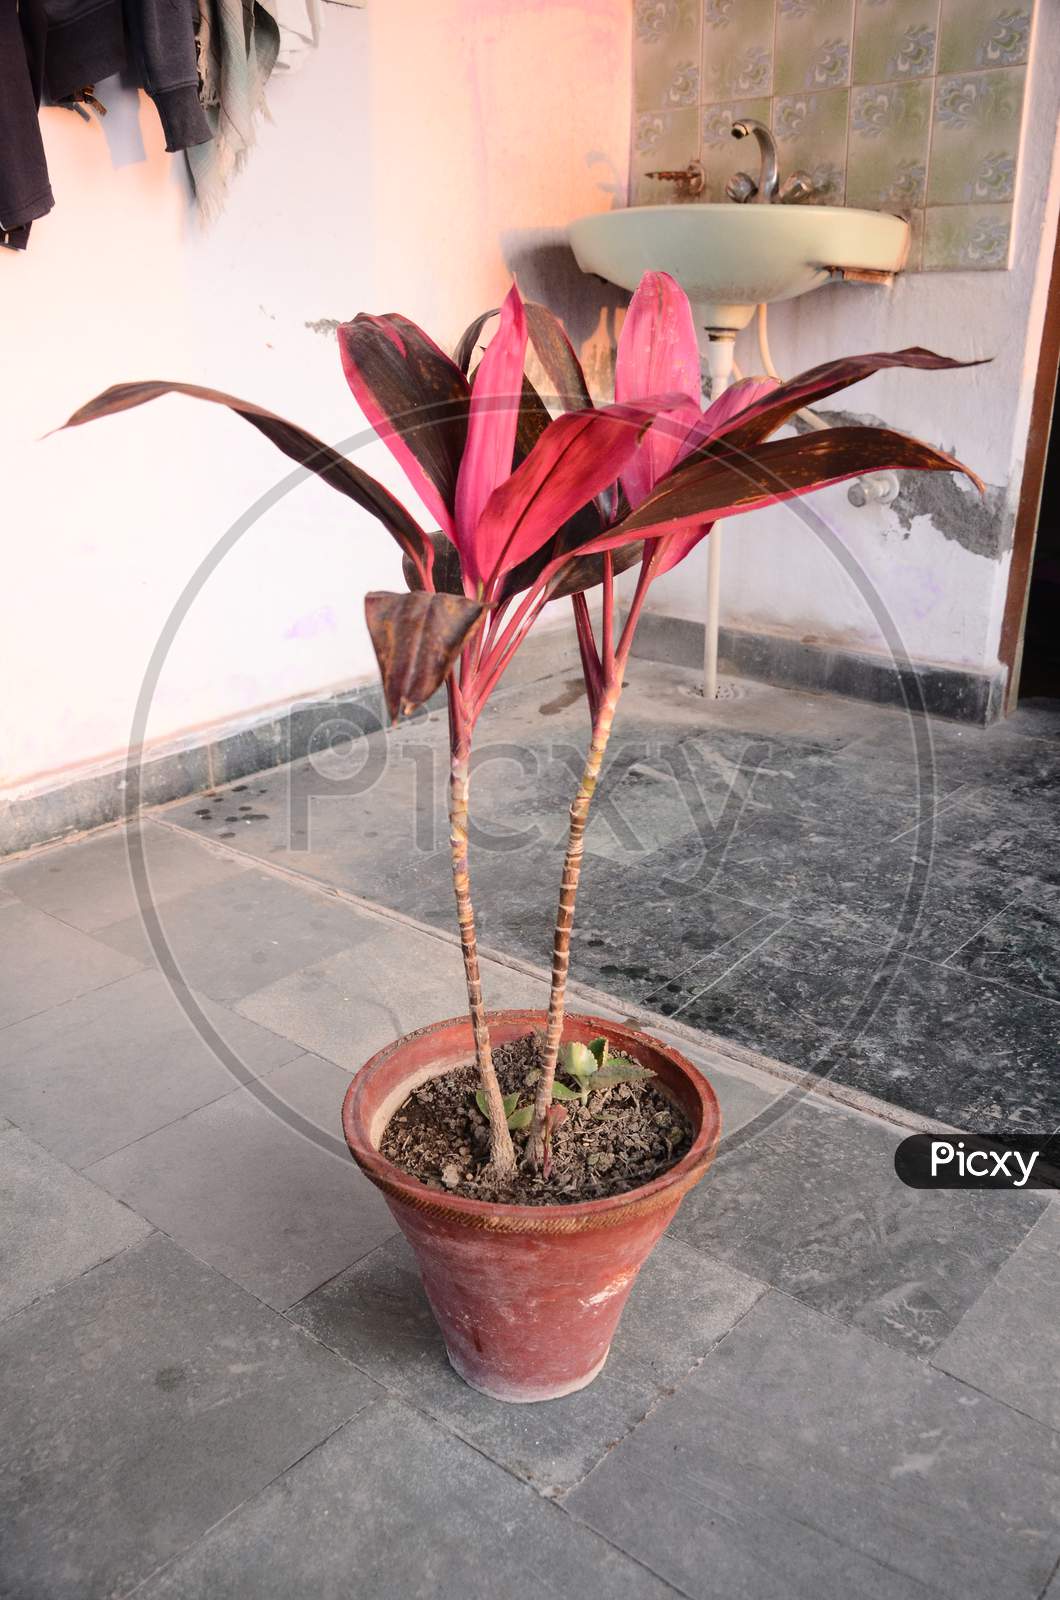 Flowering Plants Growing in pots In a House